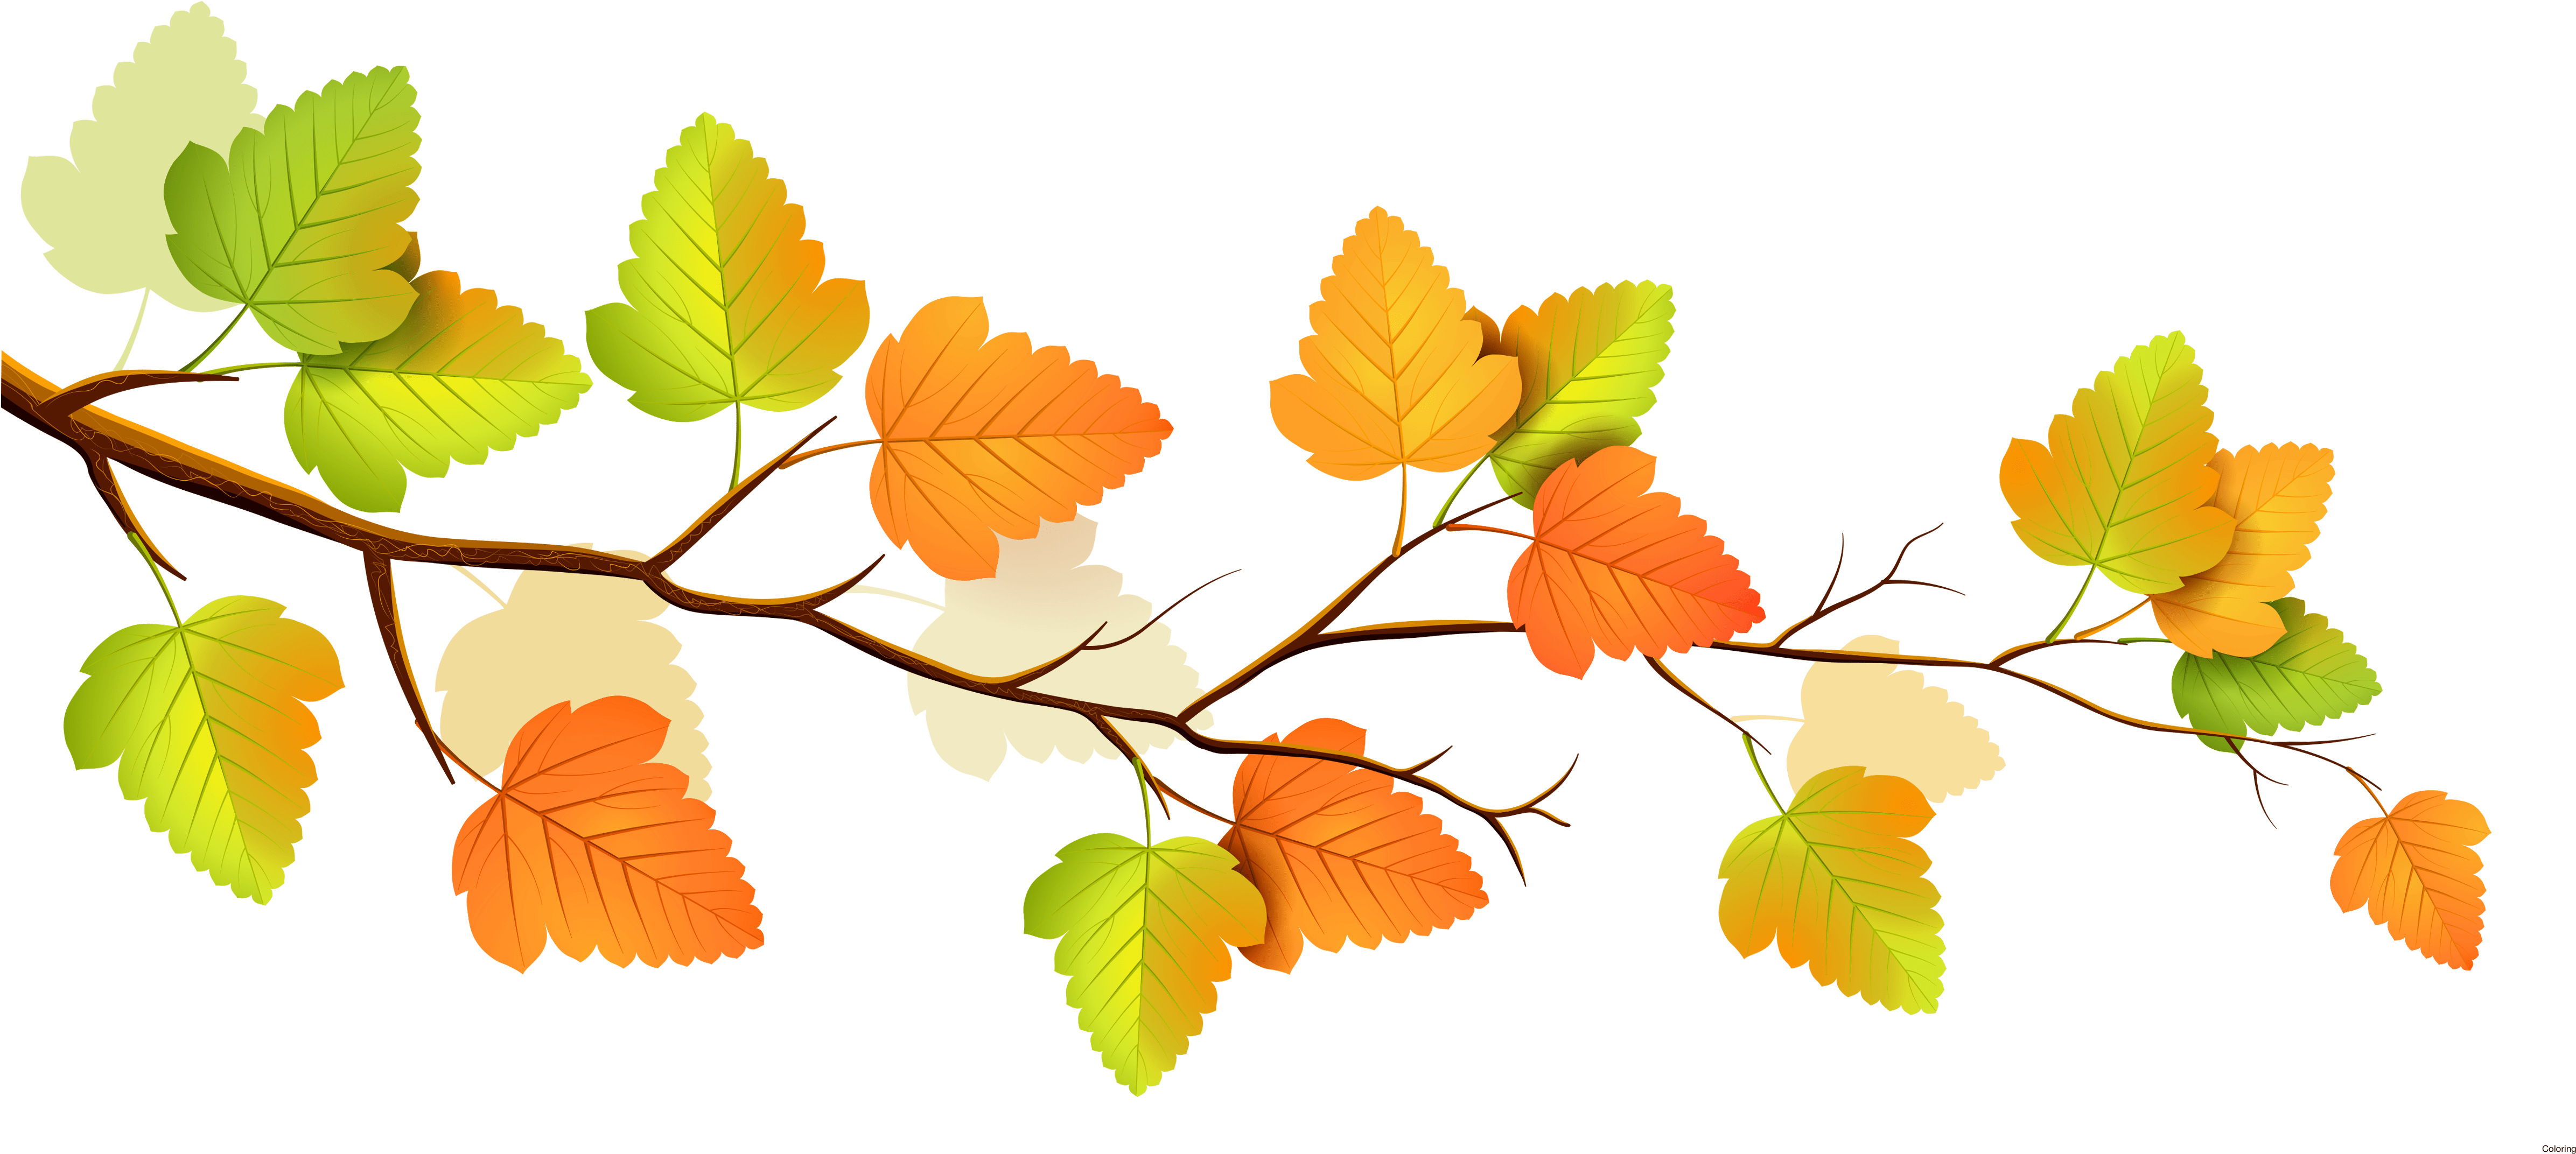 Autumn Leaves Branch Illustration